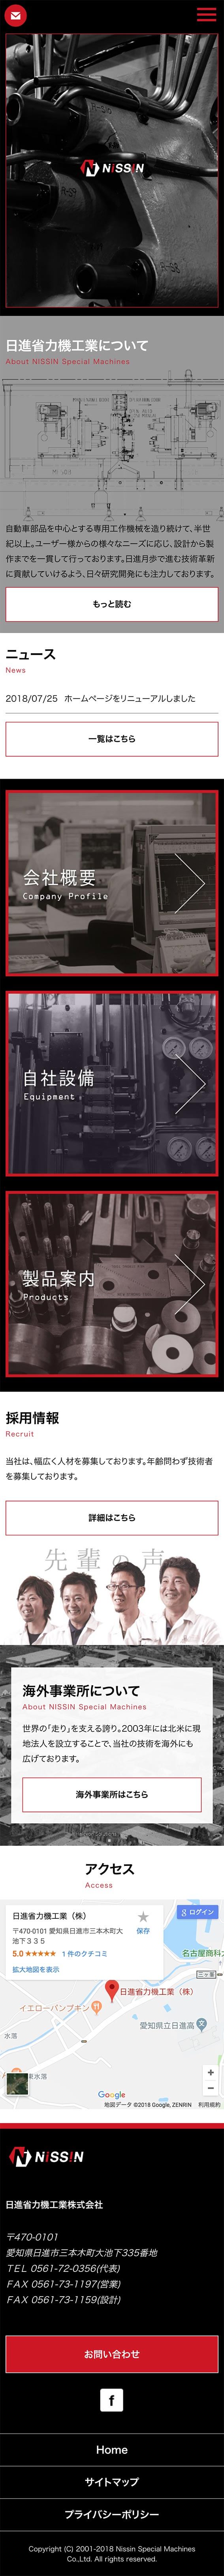  日進省力機工業株式会社様のSMPサイト画像